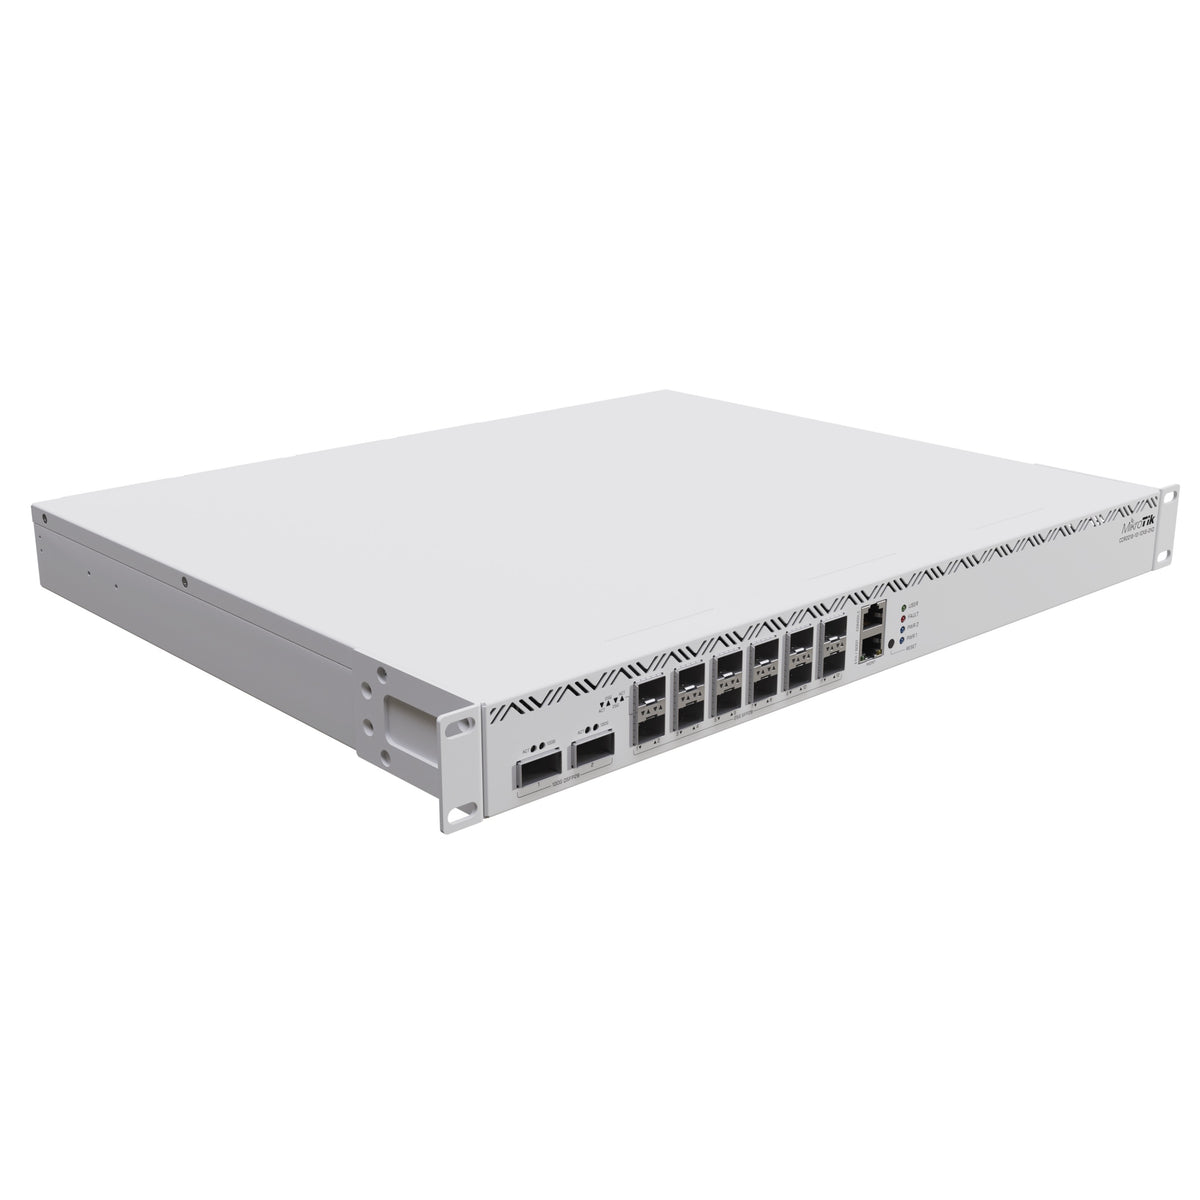 MikroTik 48-Port Cloud Router Switch 4x SFP+ 2x QSFP w/ PoE [CRS354-48 —  Baltic Networks